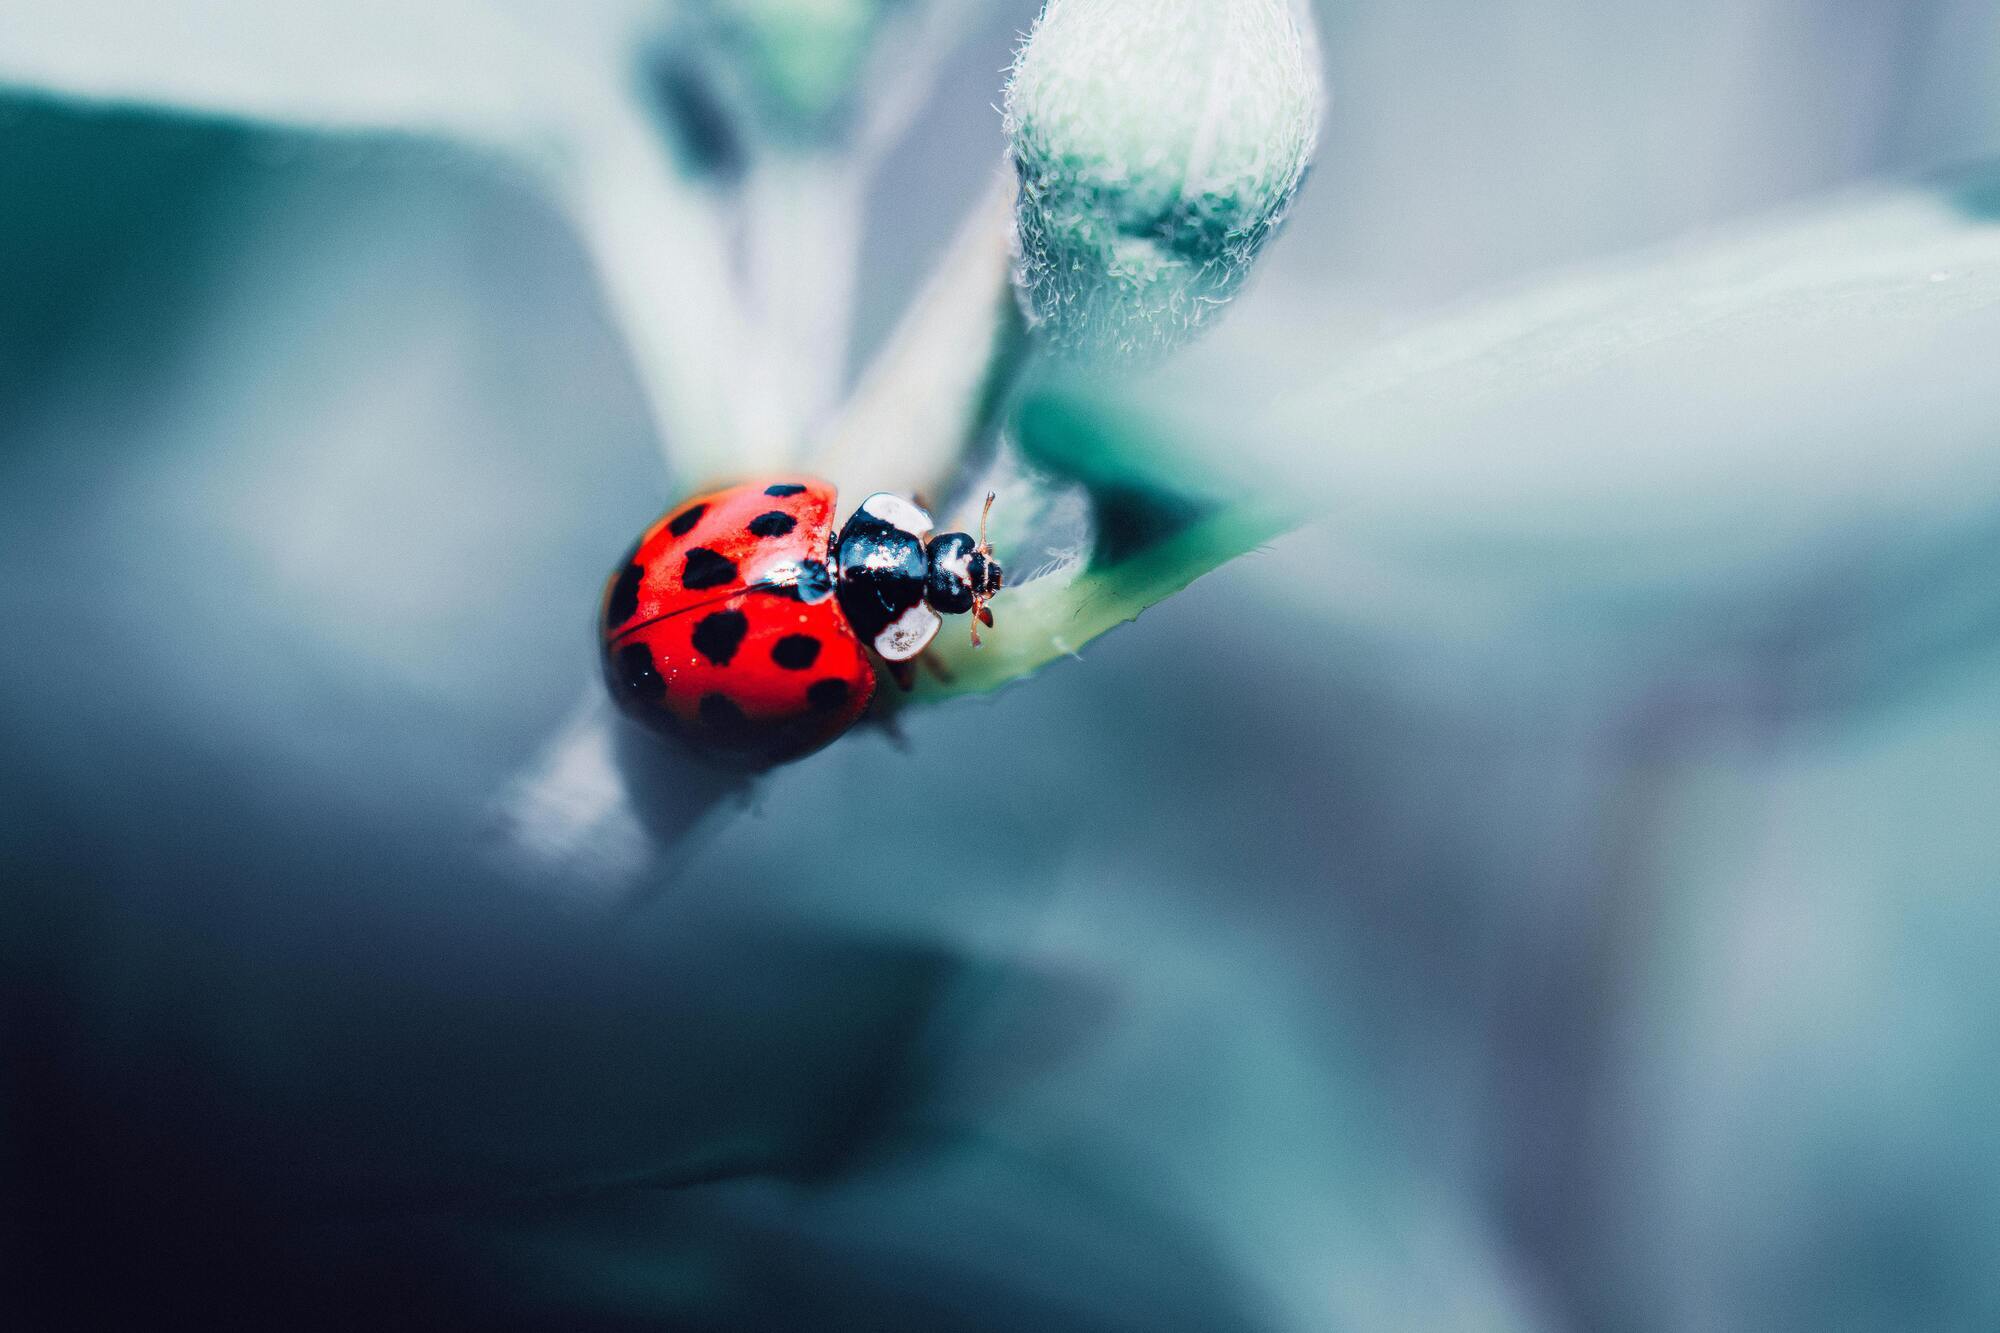 A dream about a ladybug